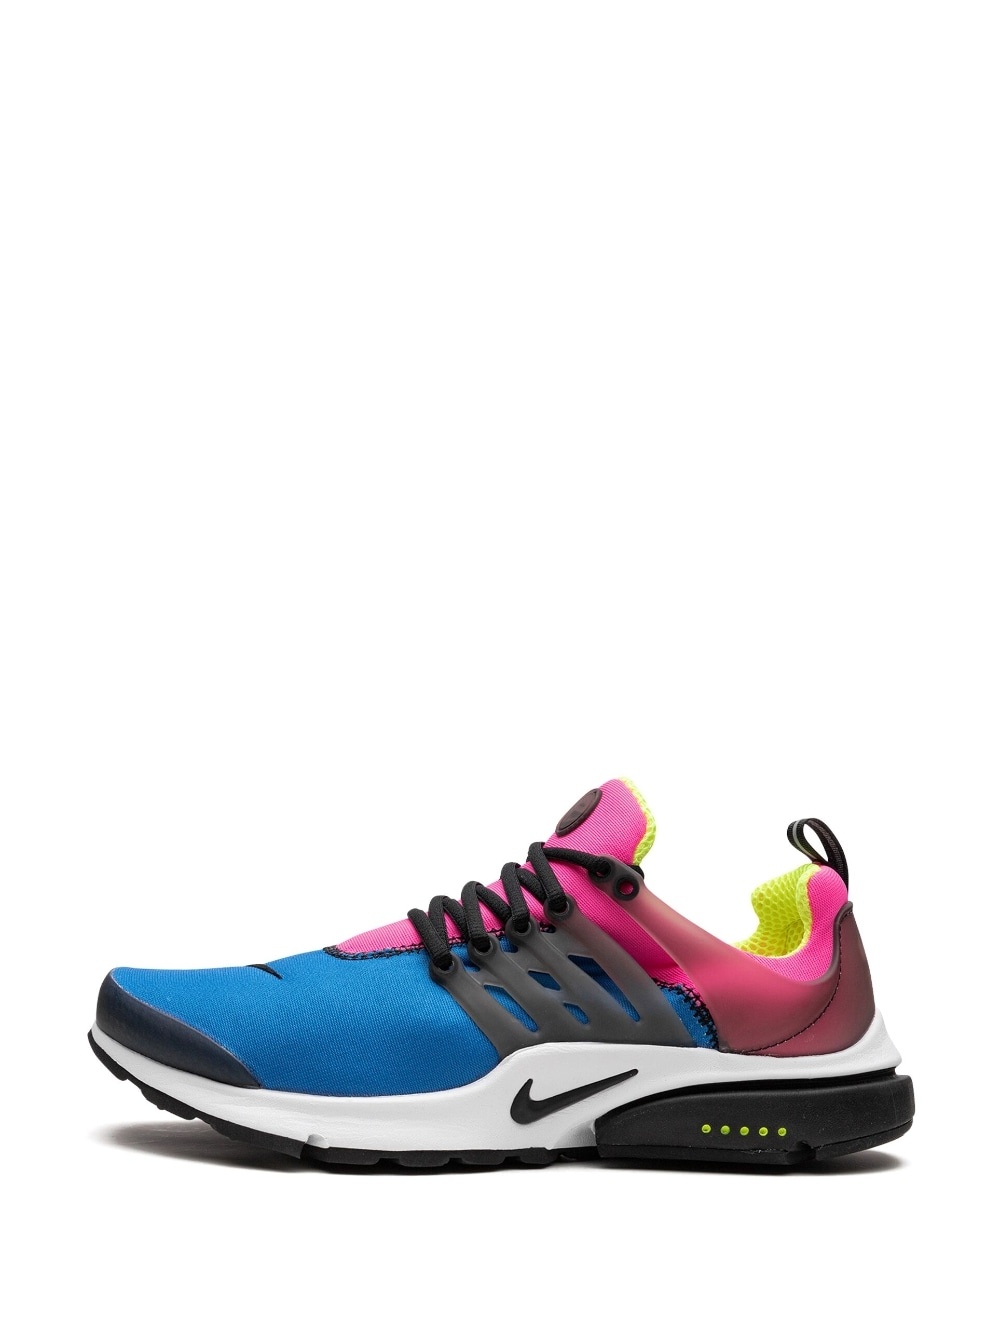 Air Presto "Pink/Blue Volt" sneakers - 5